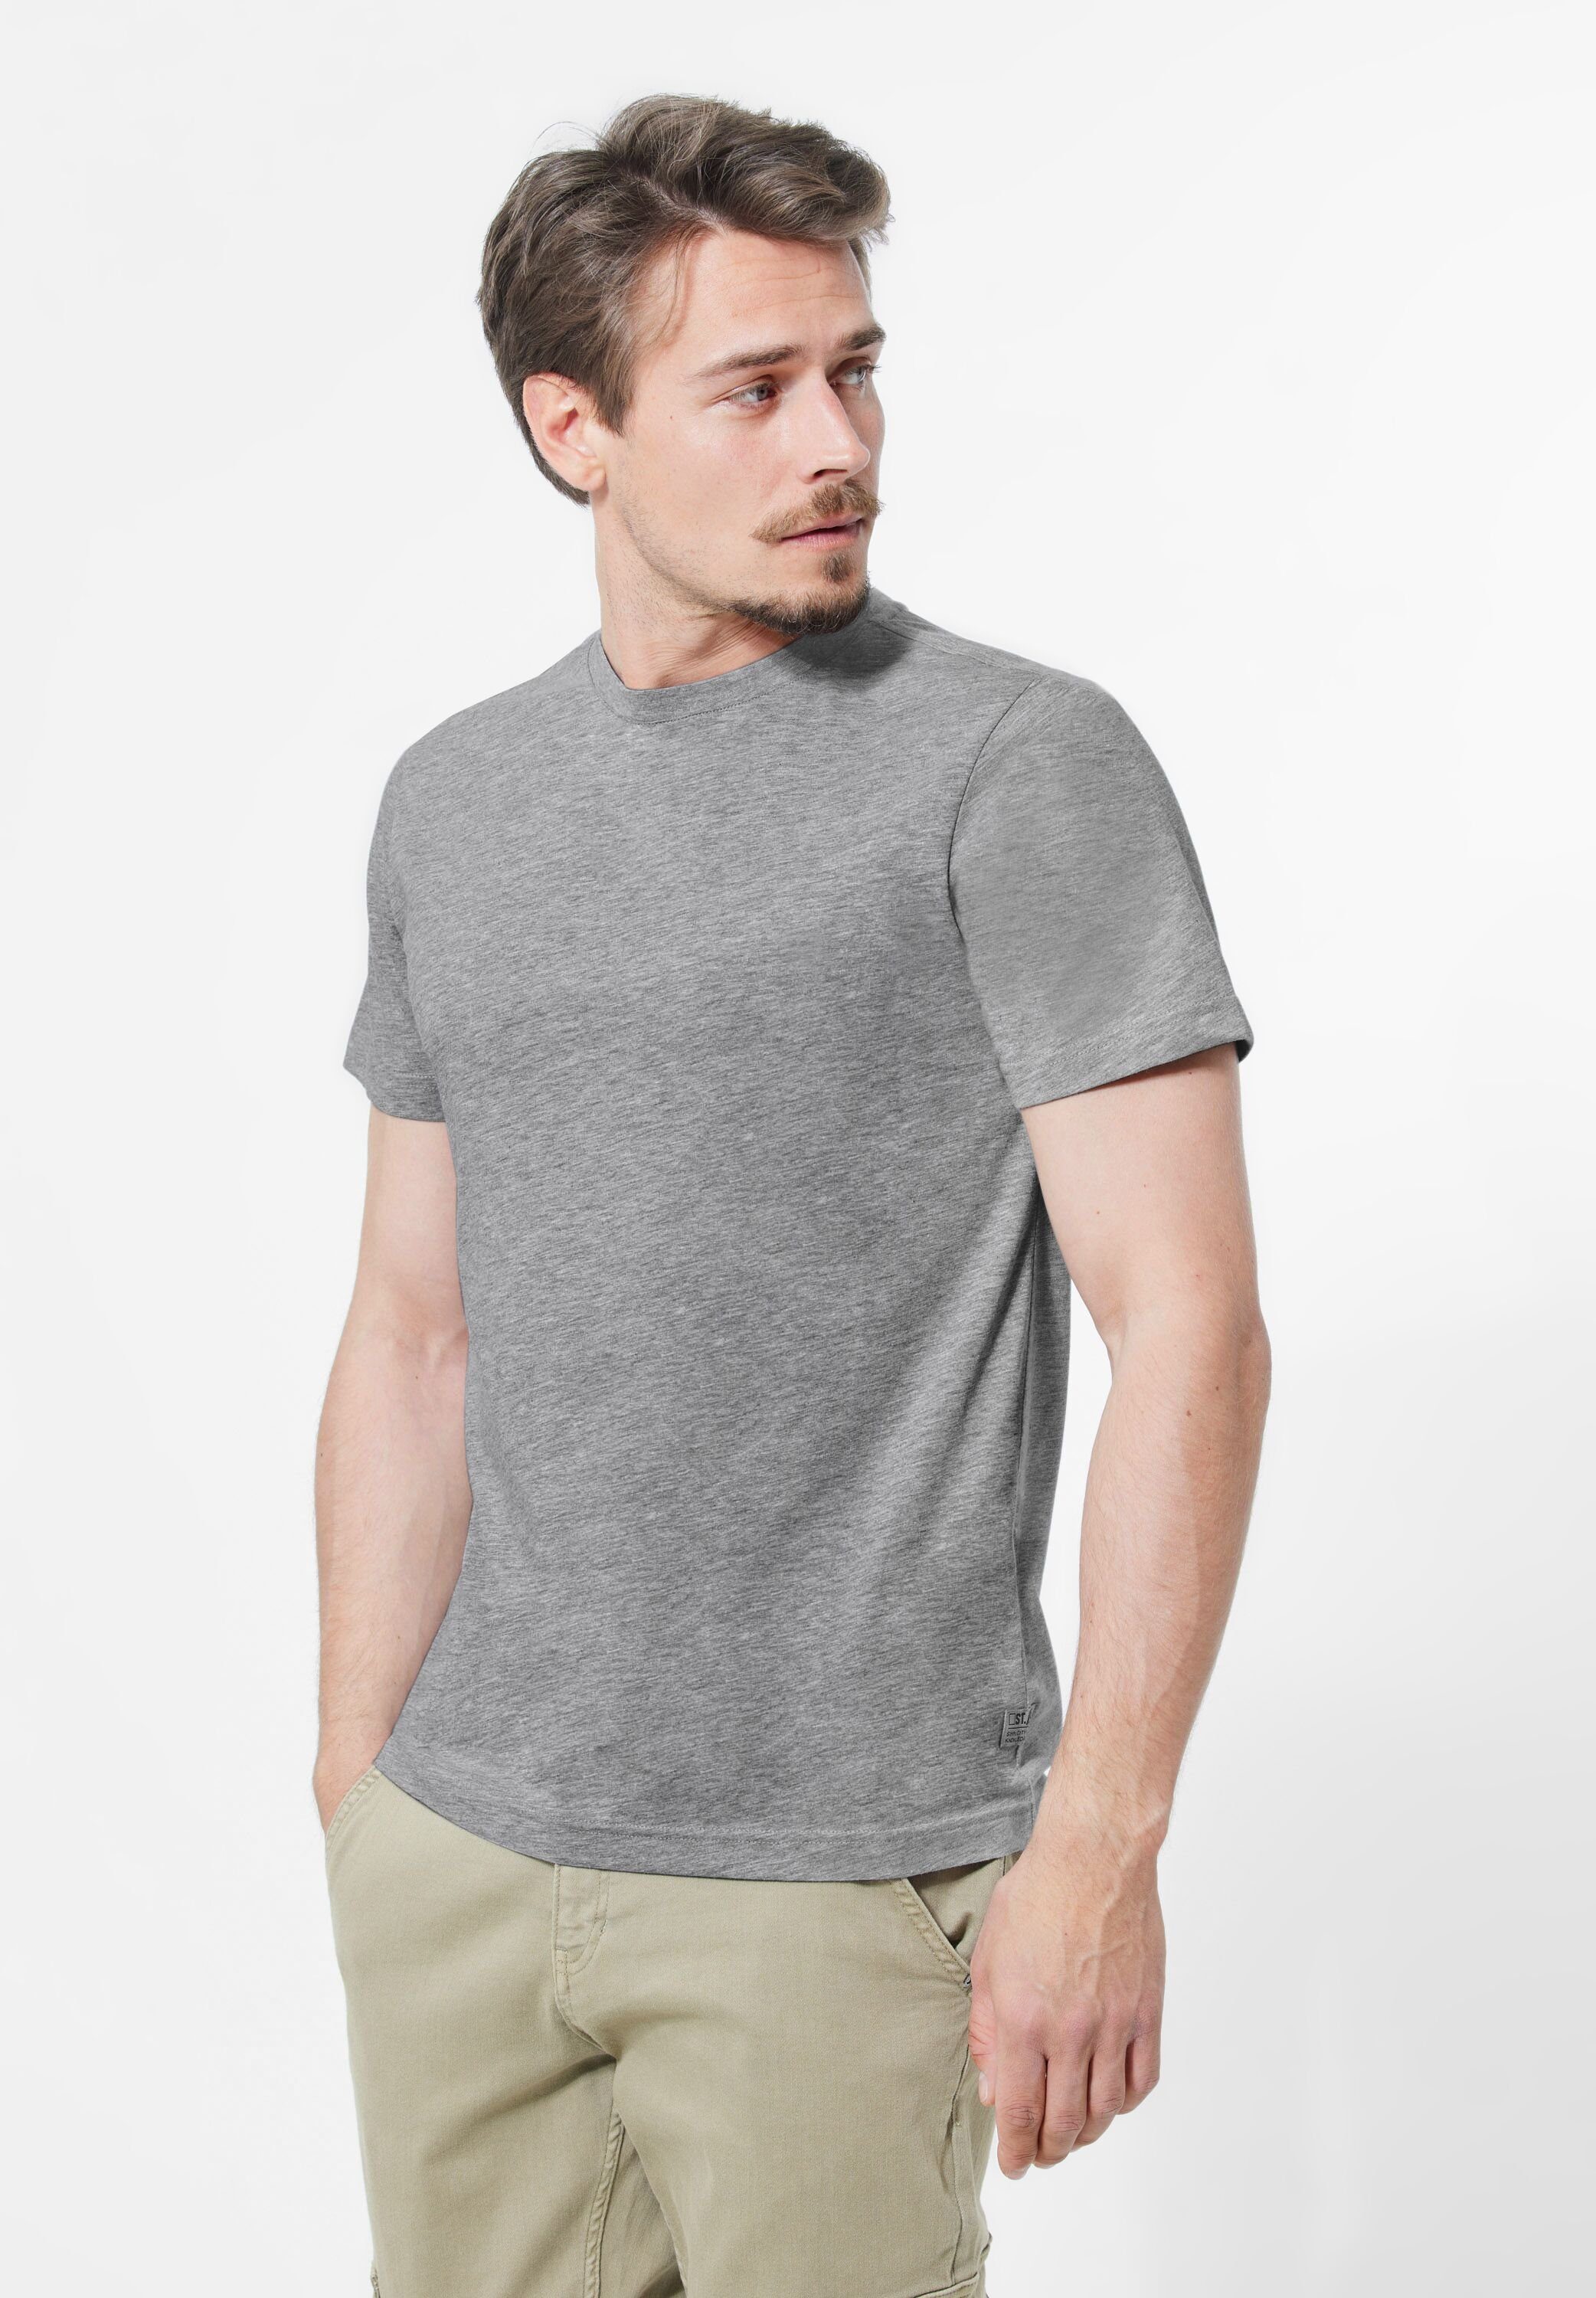 STREET Optik T-Shirt Melange in melange grey ONE MEN silver